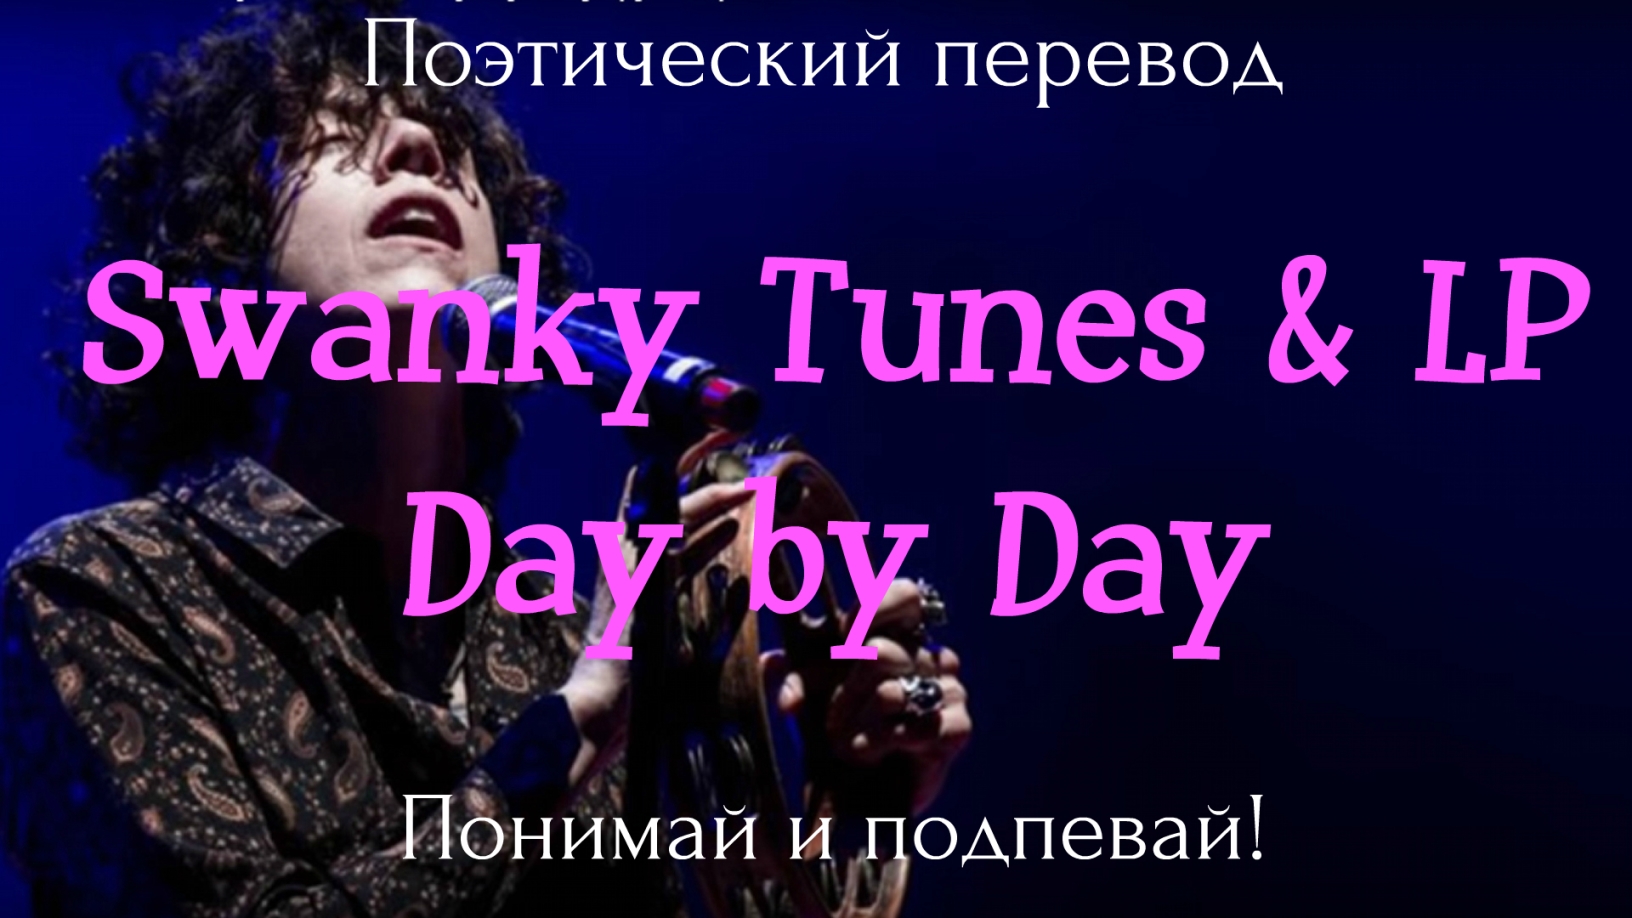 Tunes lp. Swanky Tunes & LP - Day by Day. LP перевод. LP Day by Day концерт. Дей бай дей перевести.